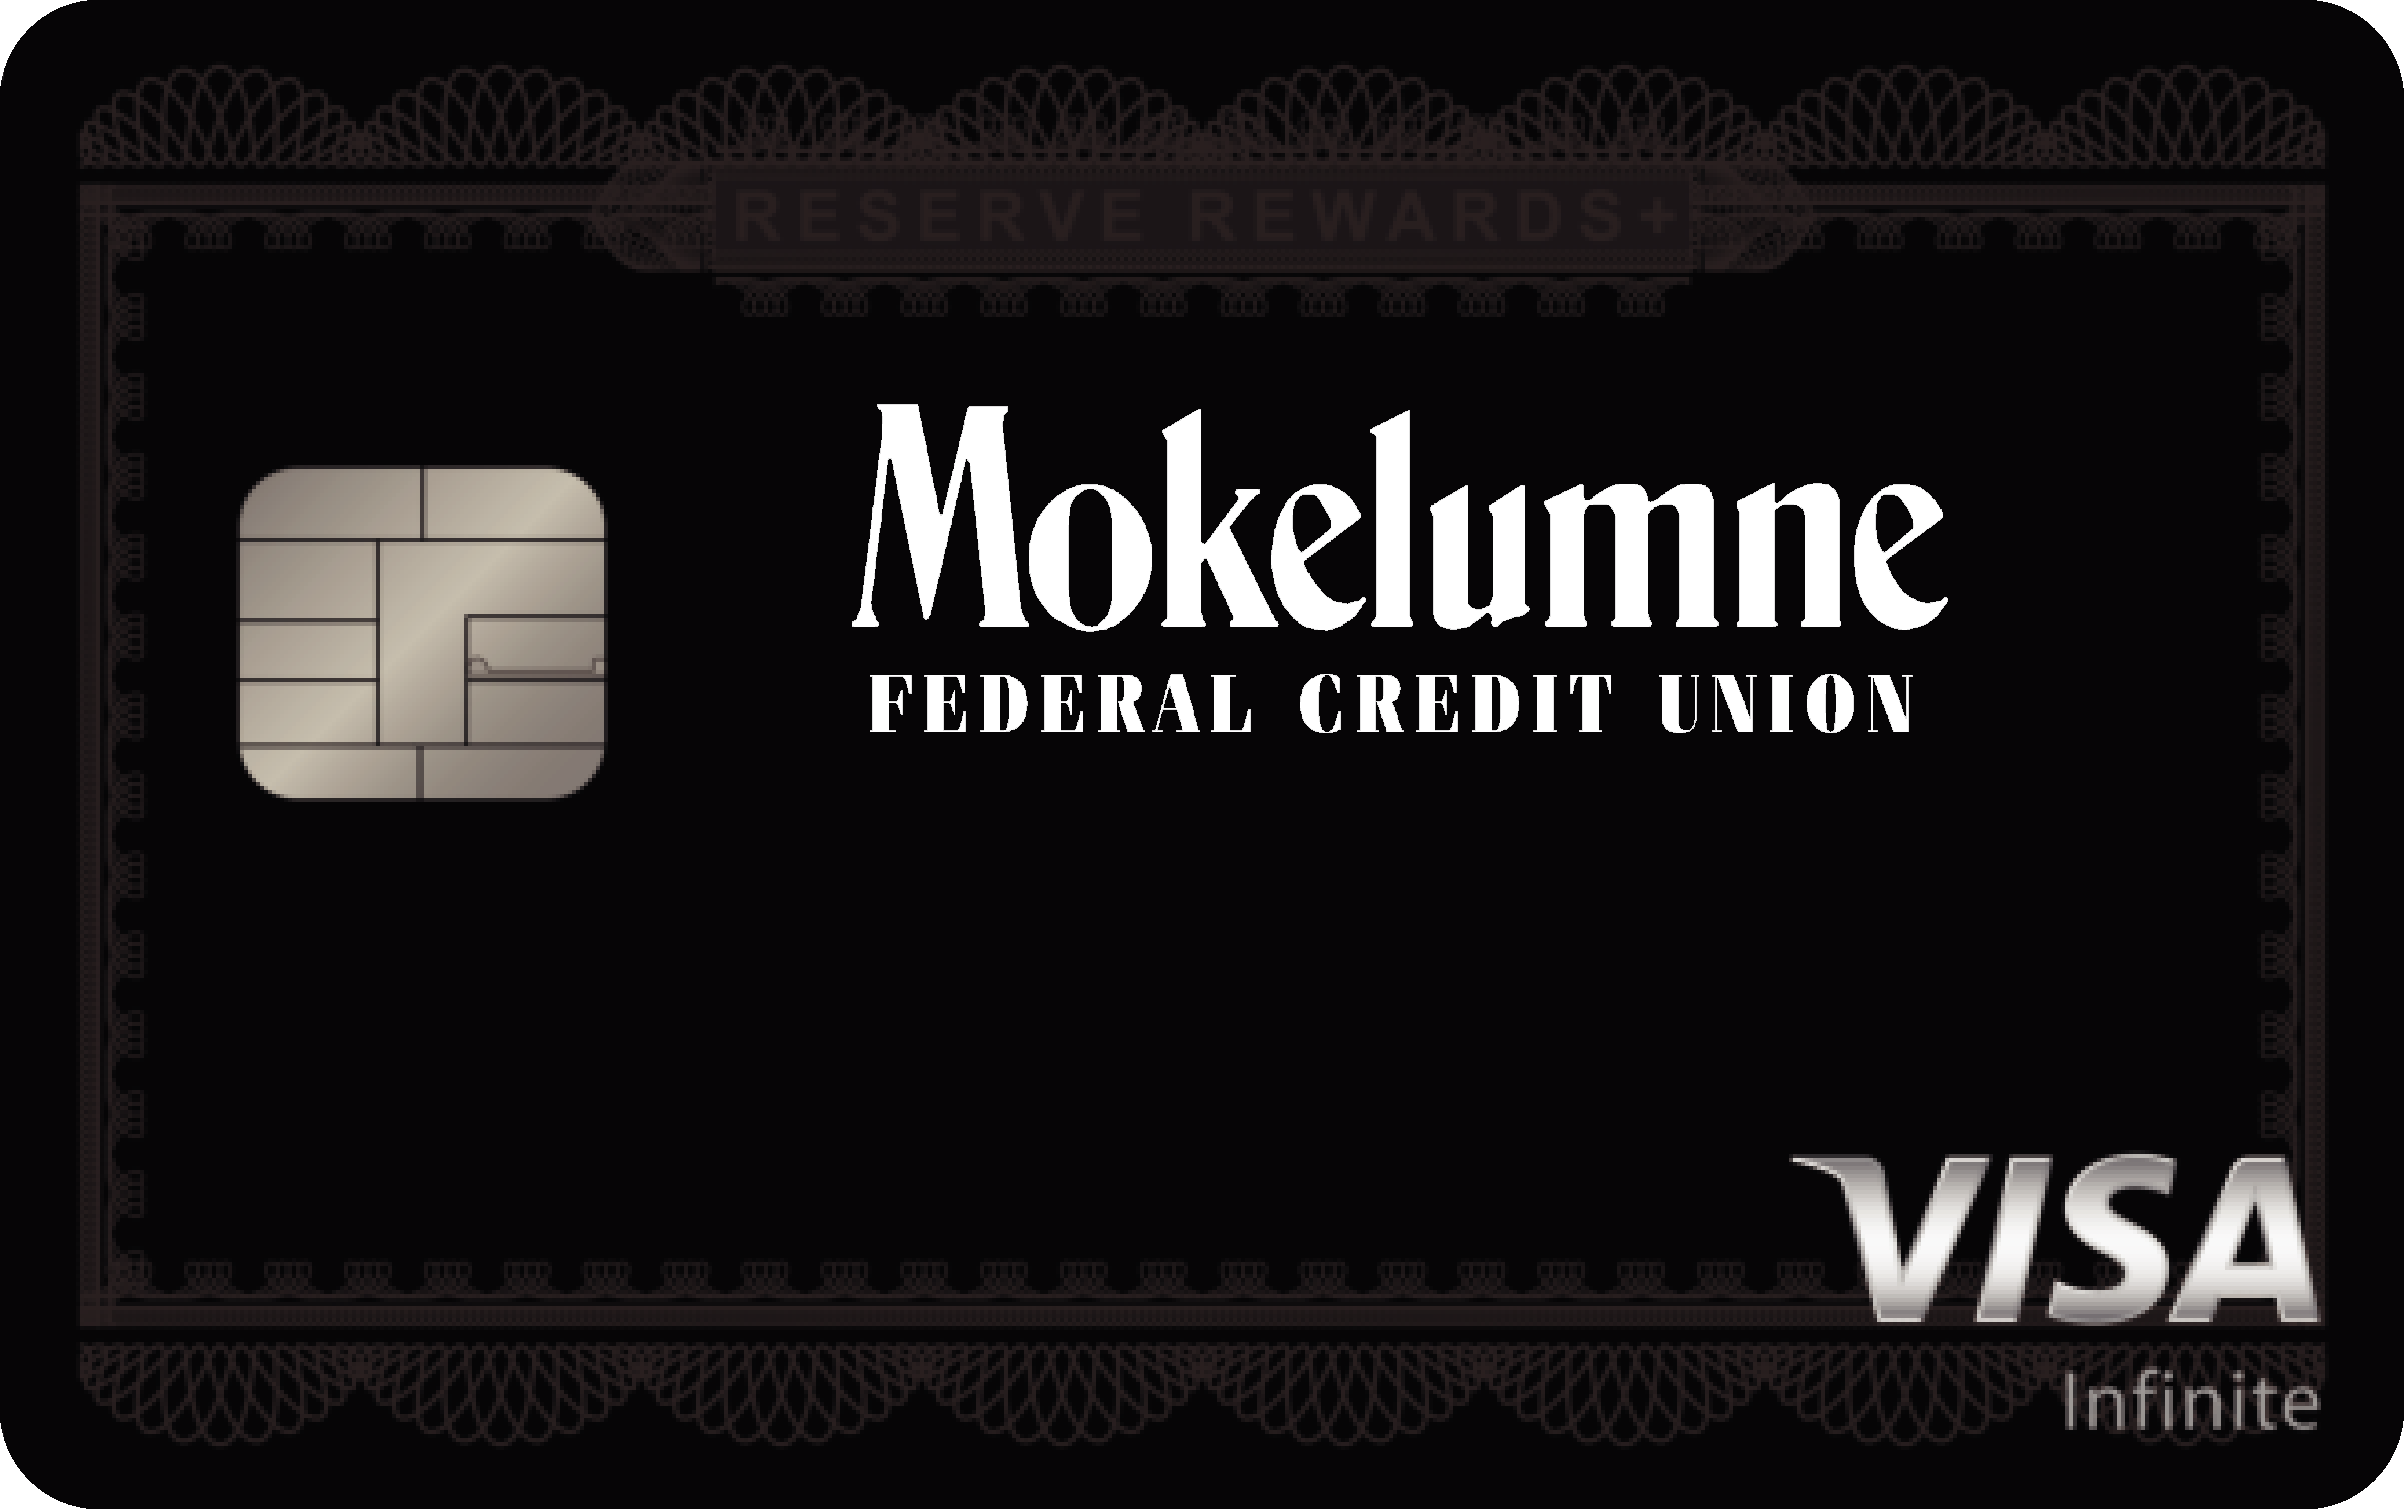 Mokelumne Federal Credit Union